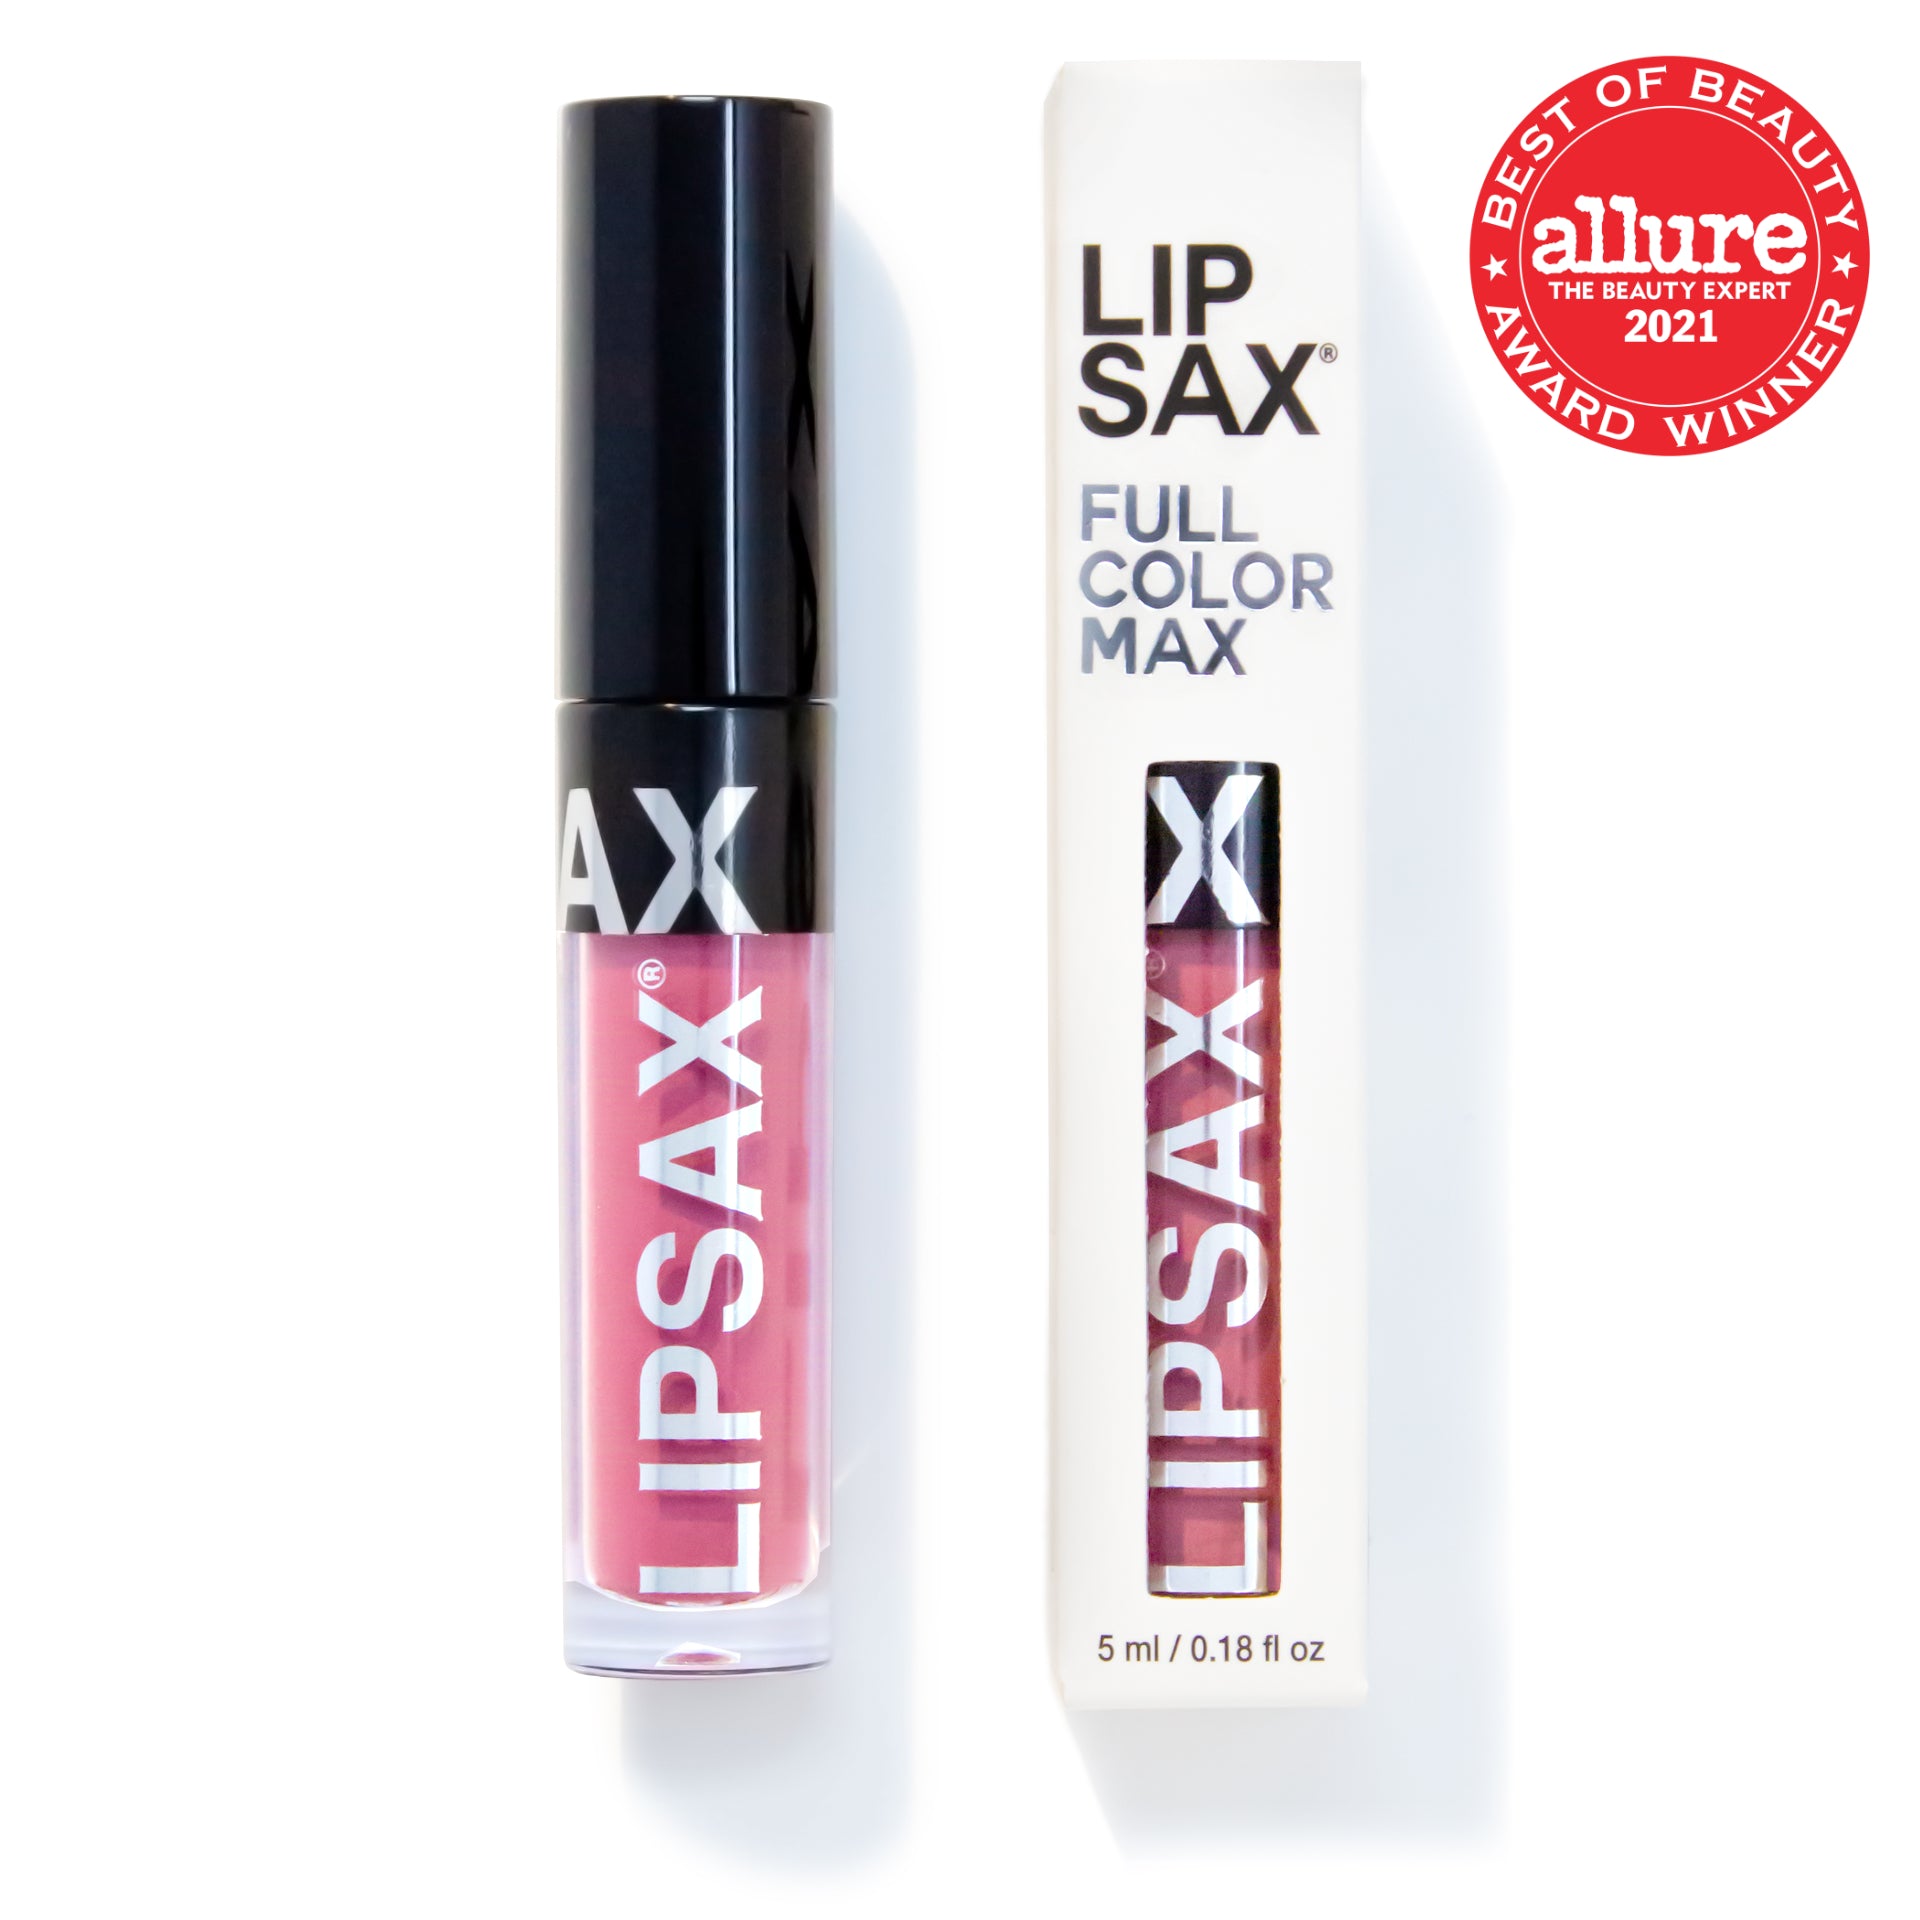 LIPSAX Selfie Bottle and Box - Matte Liquid Lipstick - Allure Best of Beauty 2021